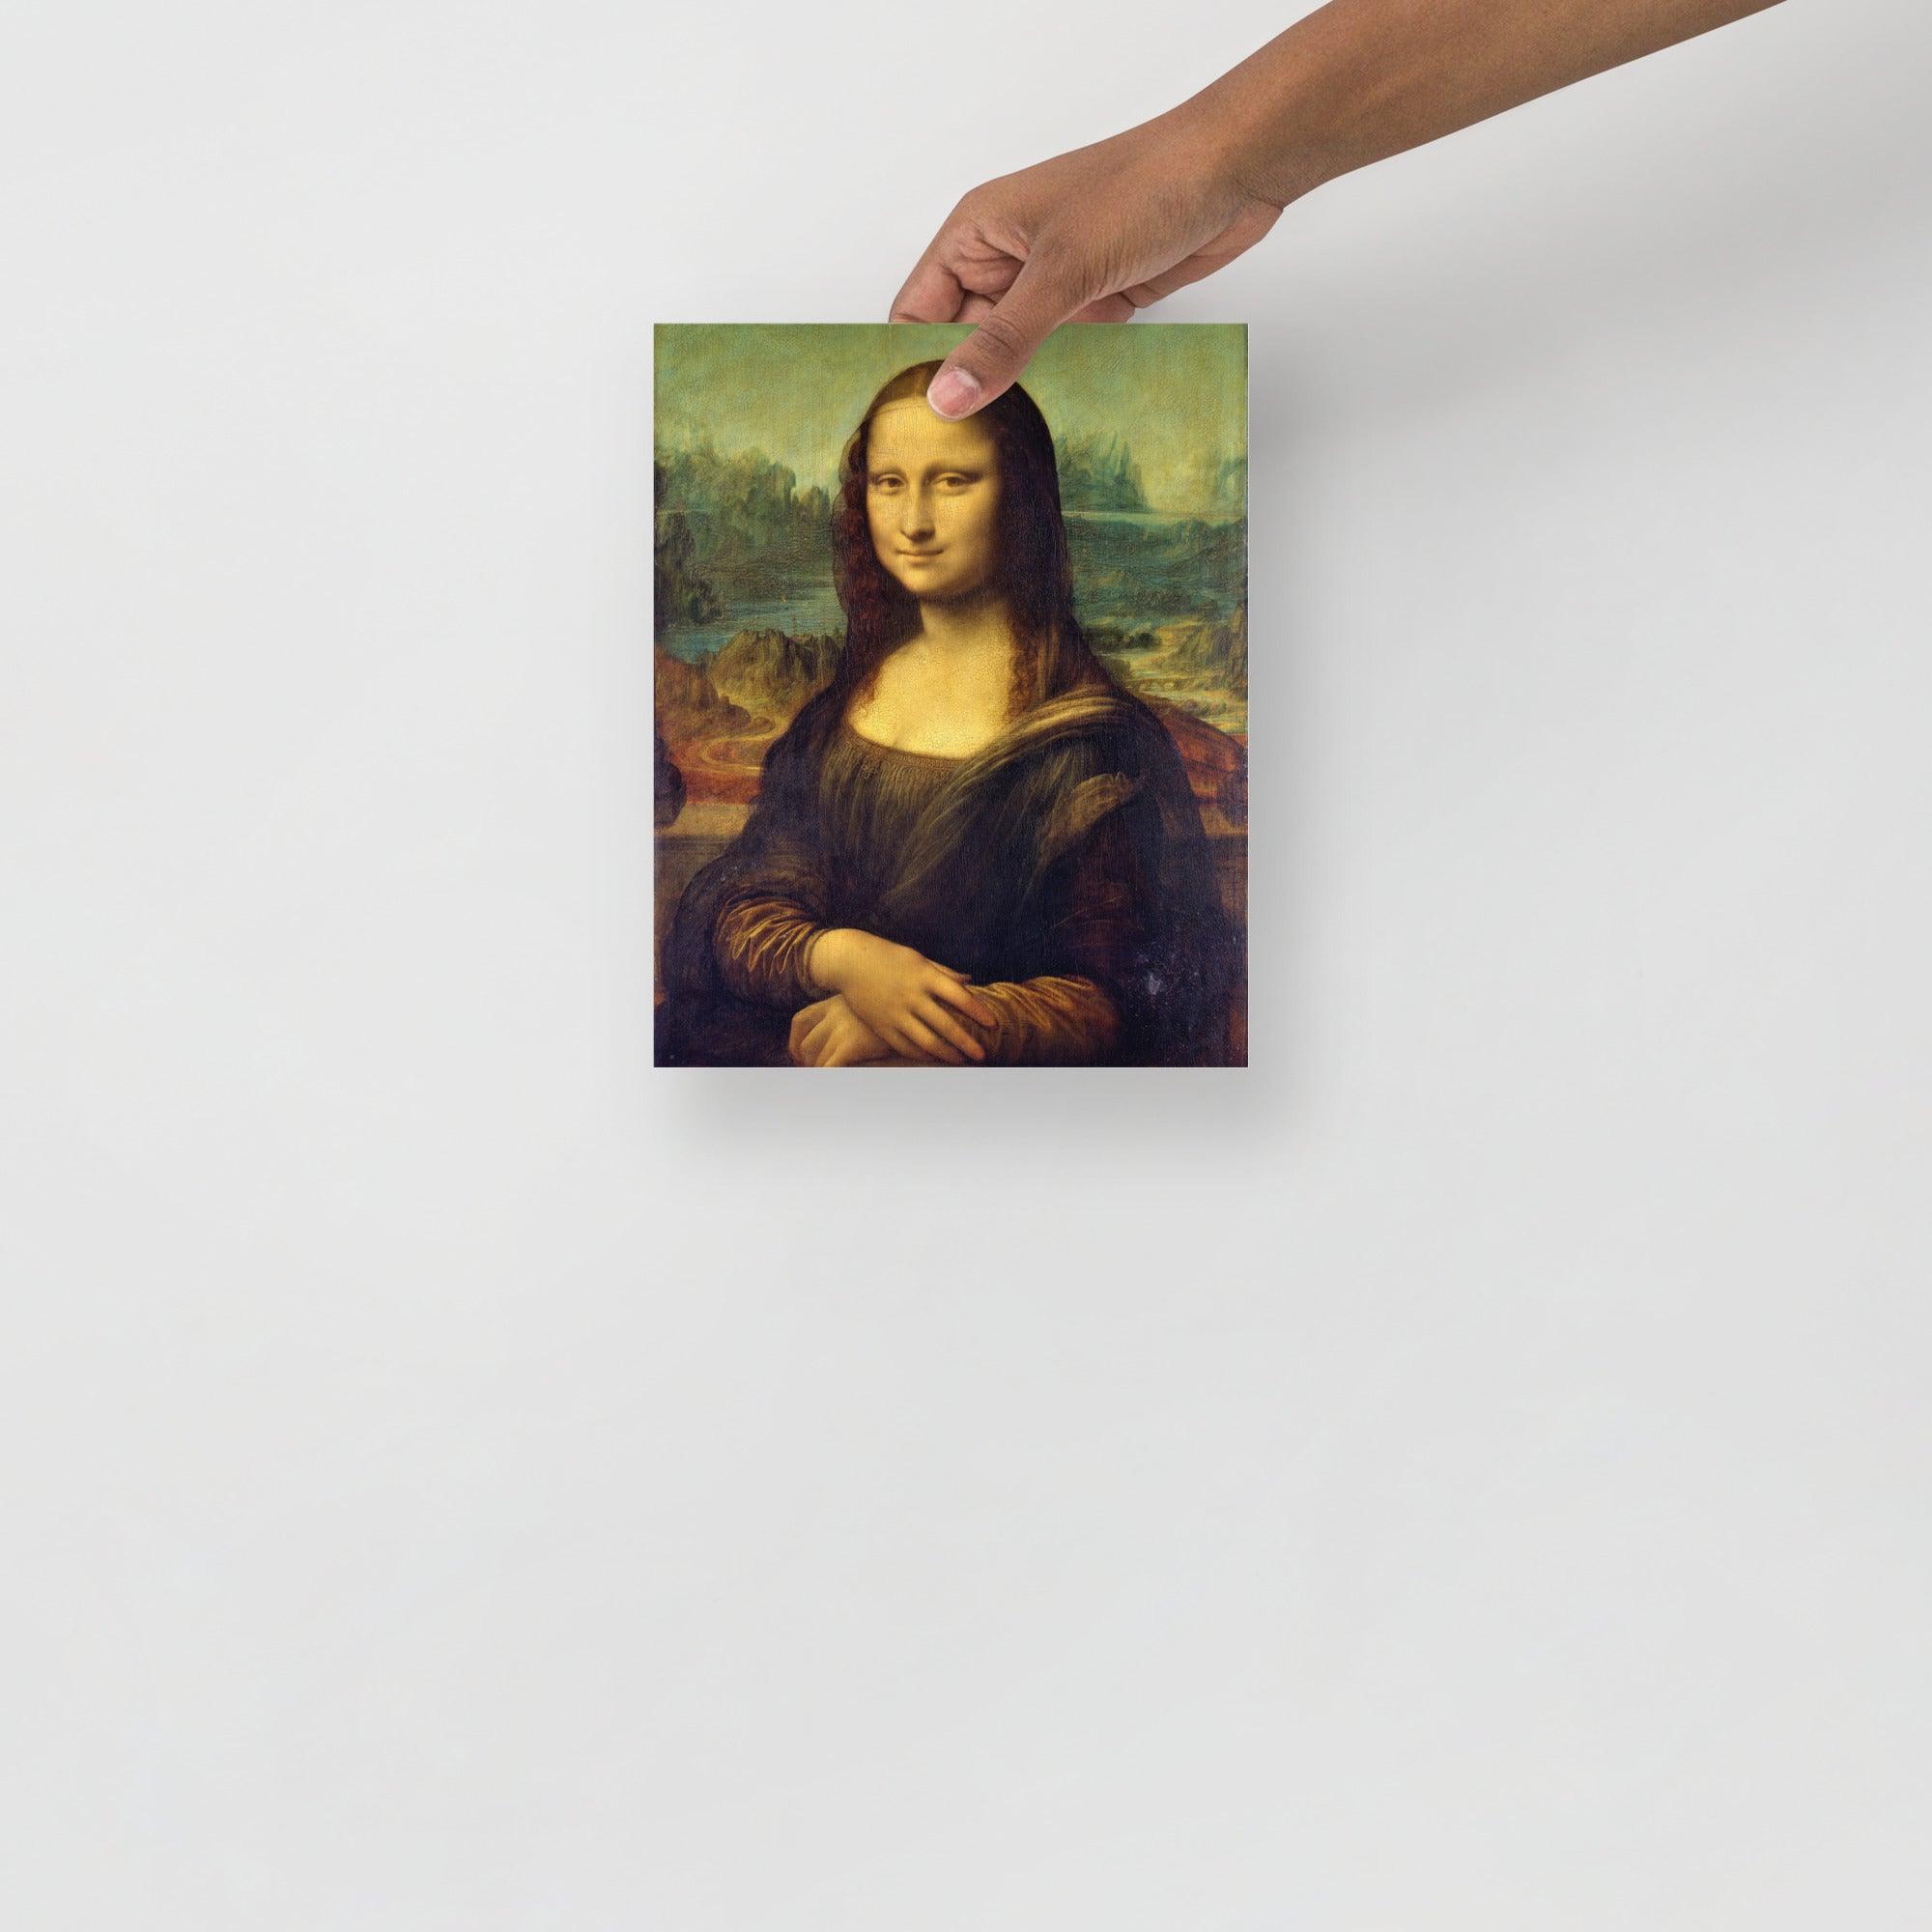 A Mona Lisa by Leonardo Da Vinci poster on a plain backdrop in size 8x10”.